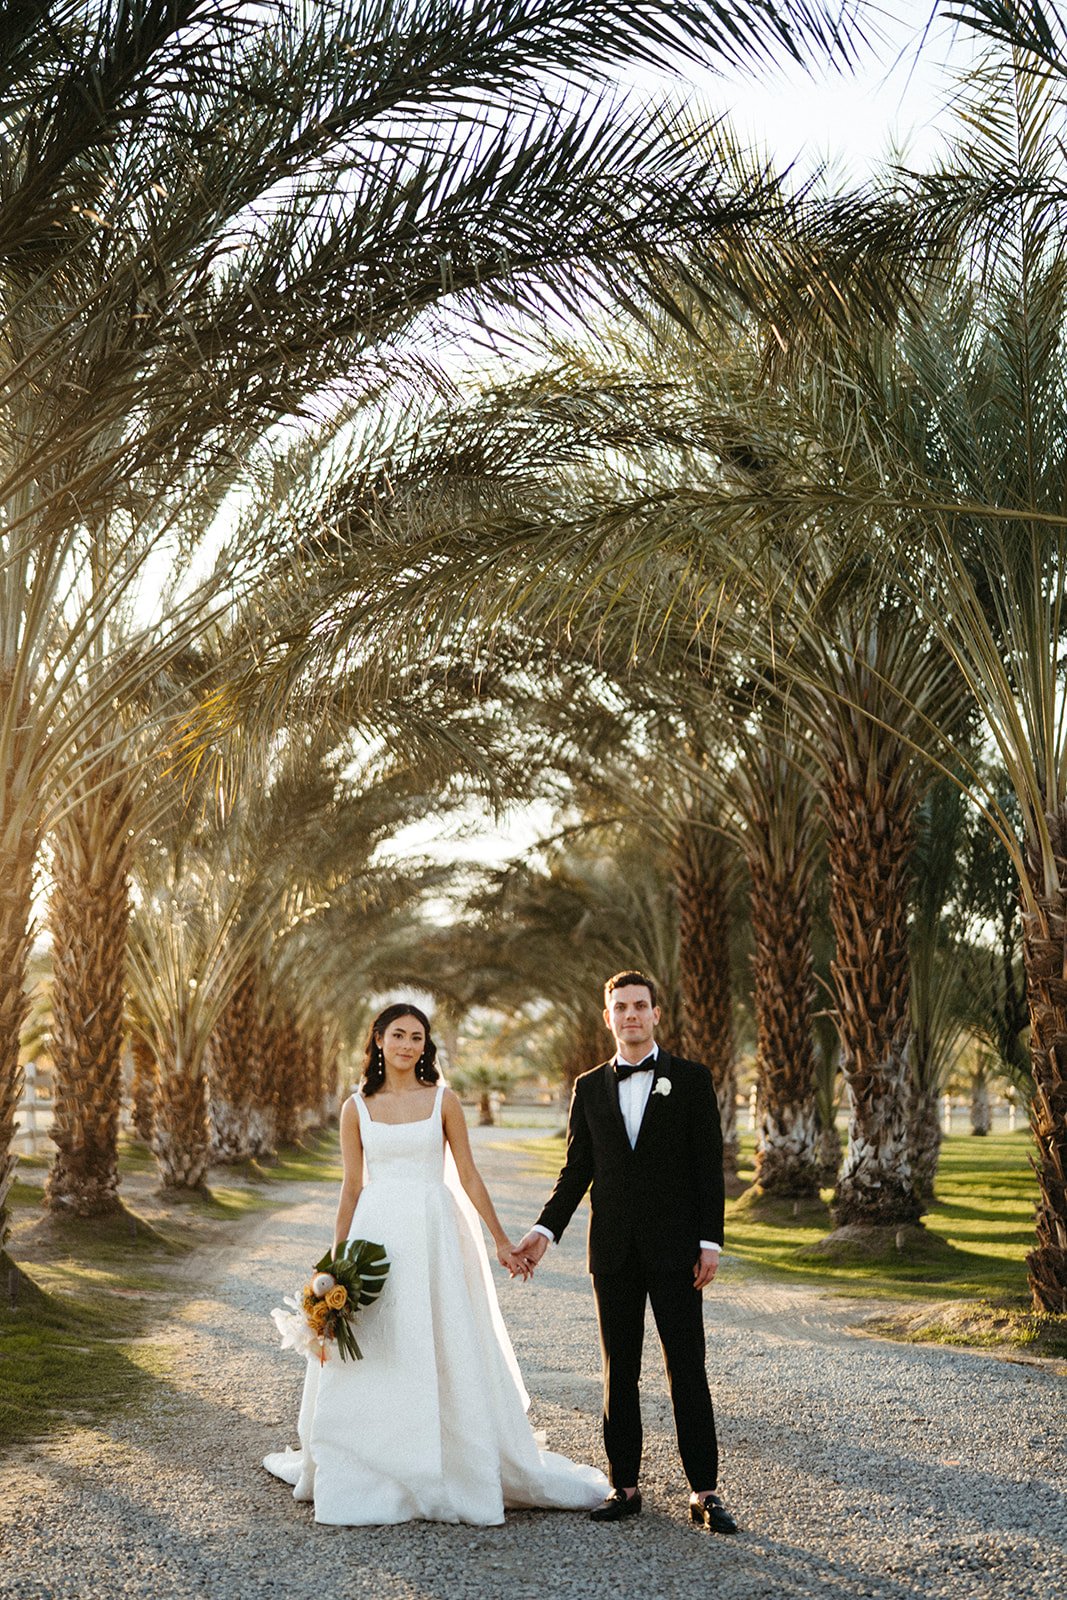  palm springs desert wedding Anne Barge Coraline square neckline   